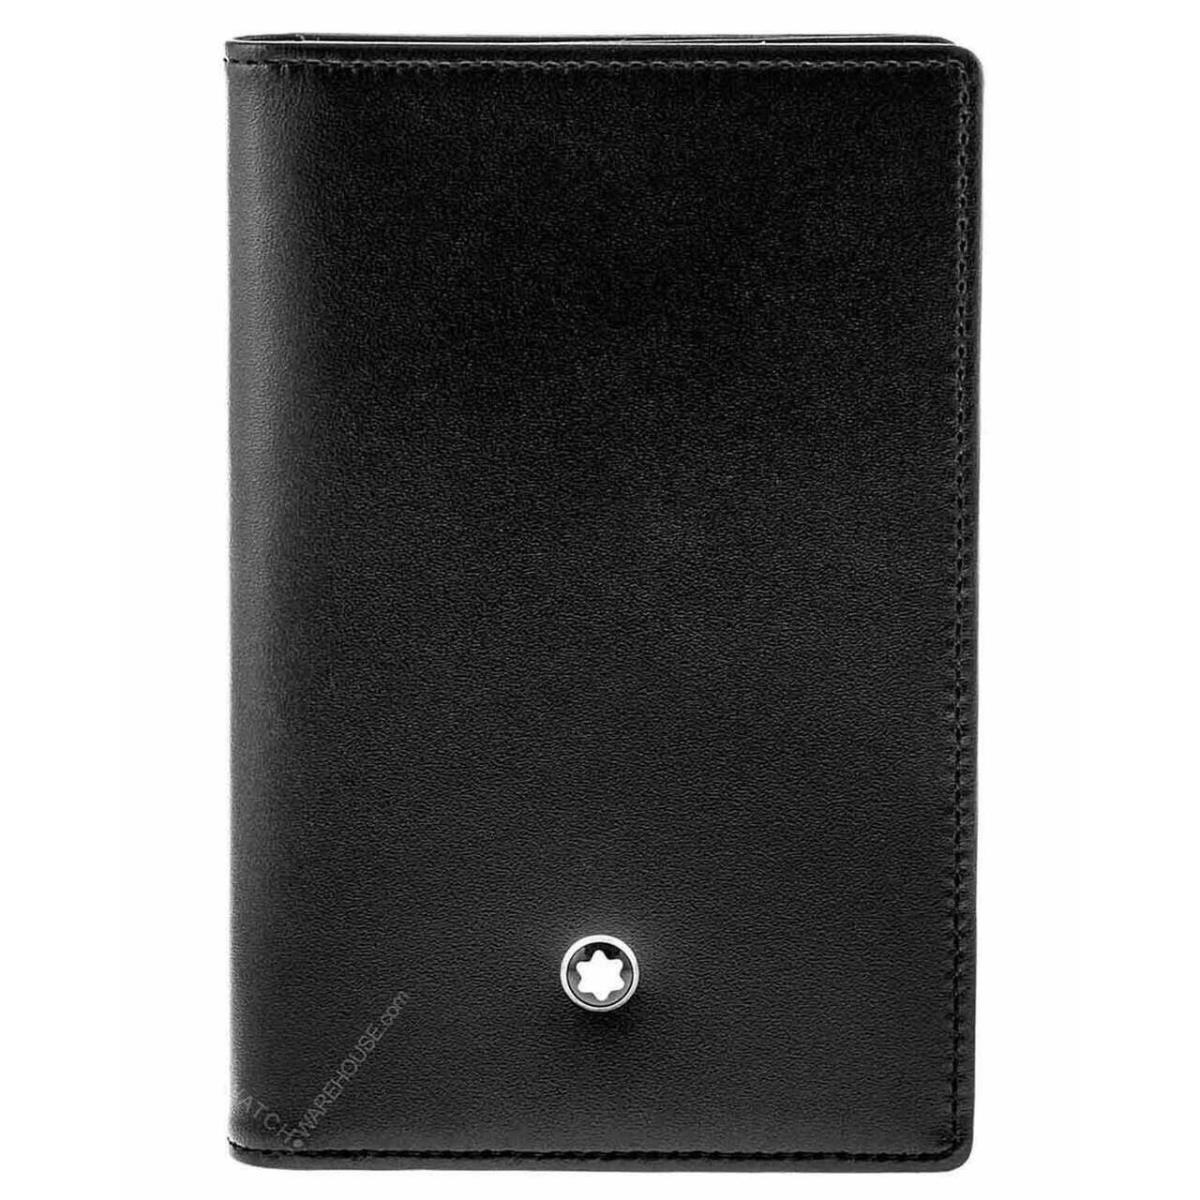 Montblanc Meisterstuck Black Cowhide Leather Business Card Holder 14108